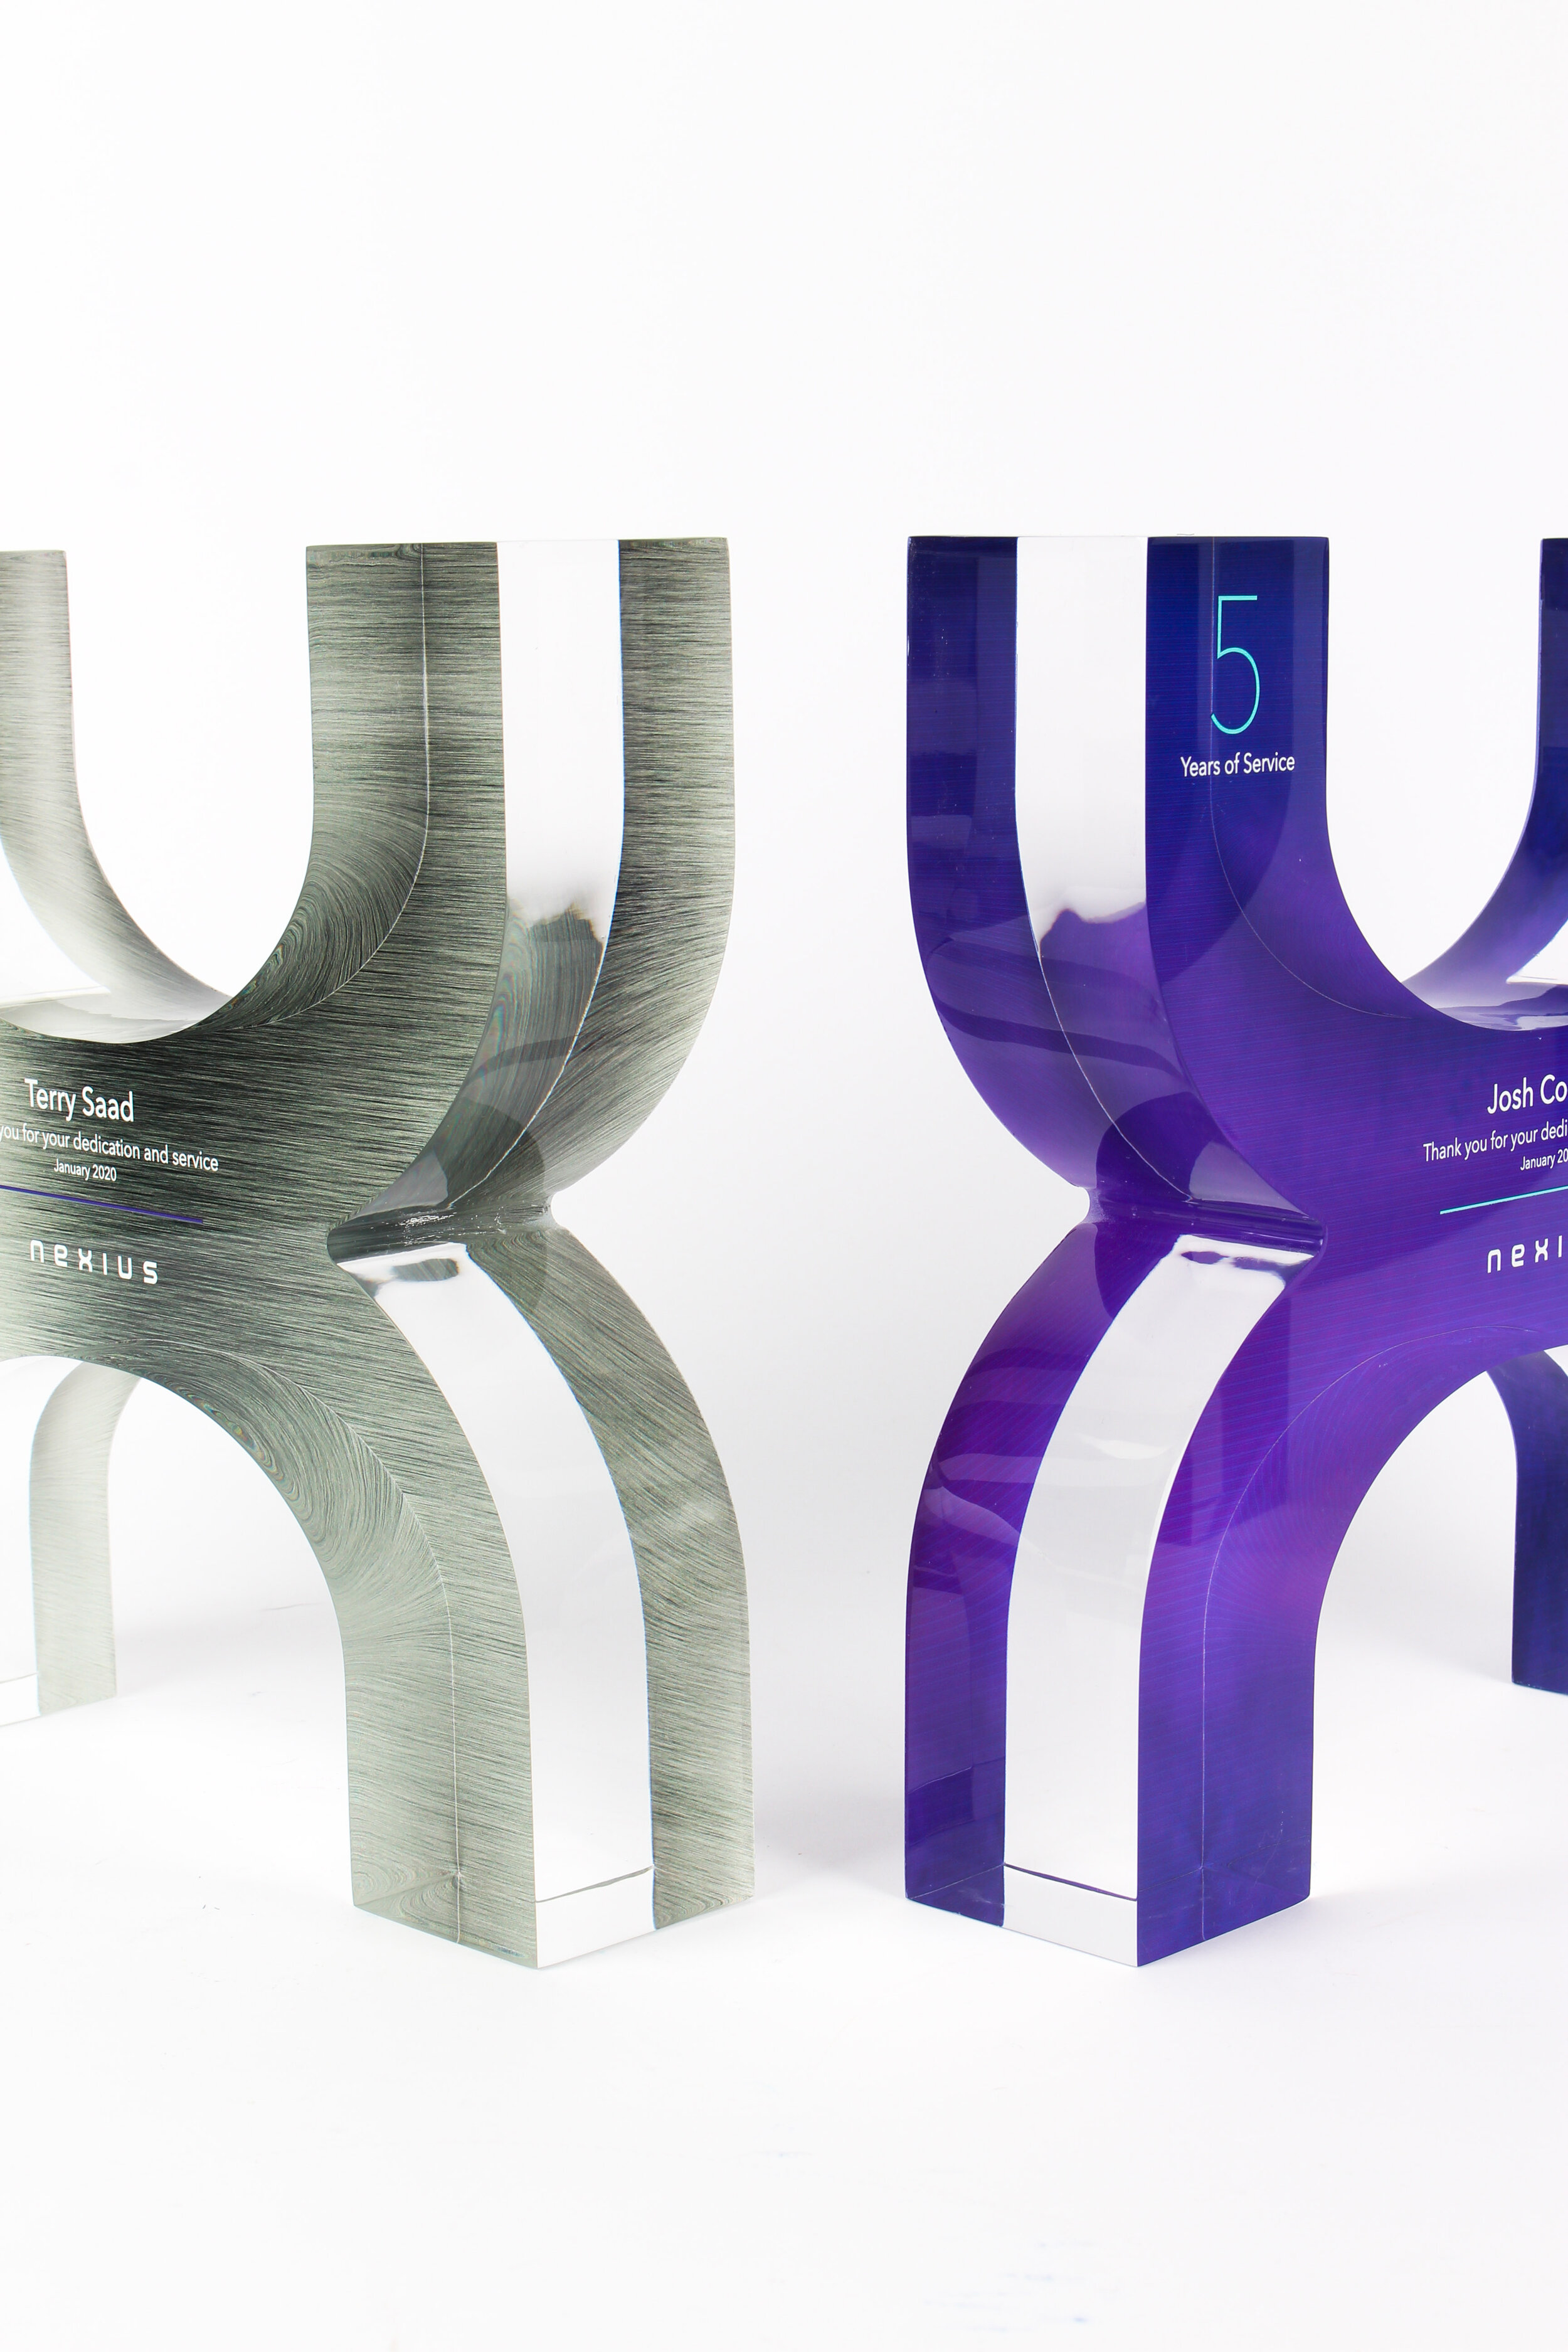 nexius employee service awards looks like glass or crystal